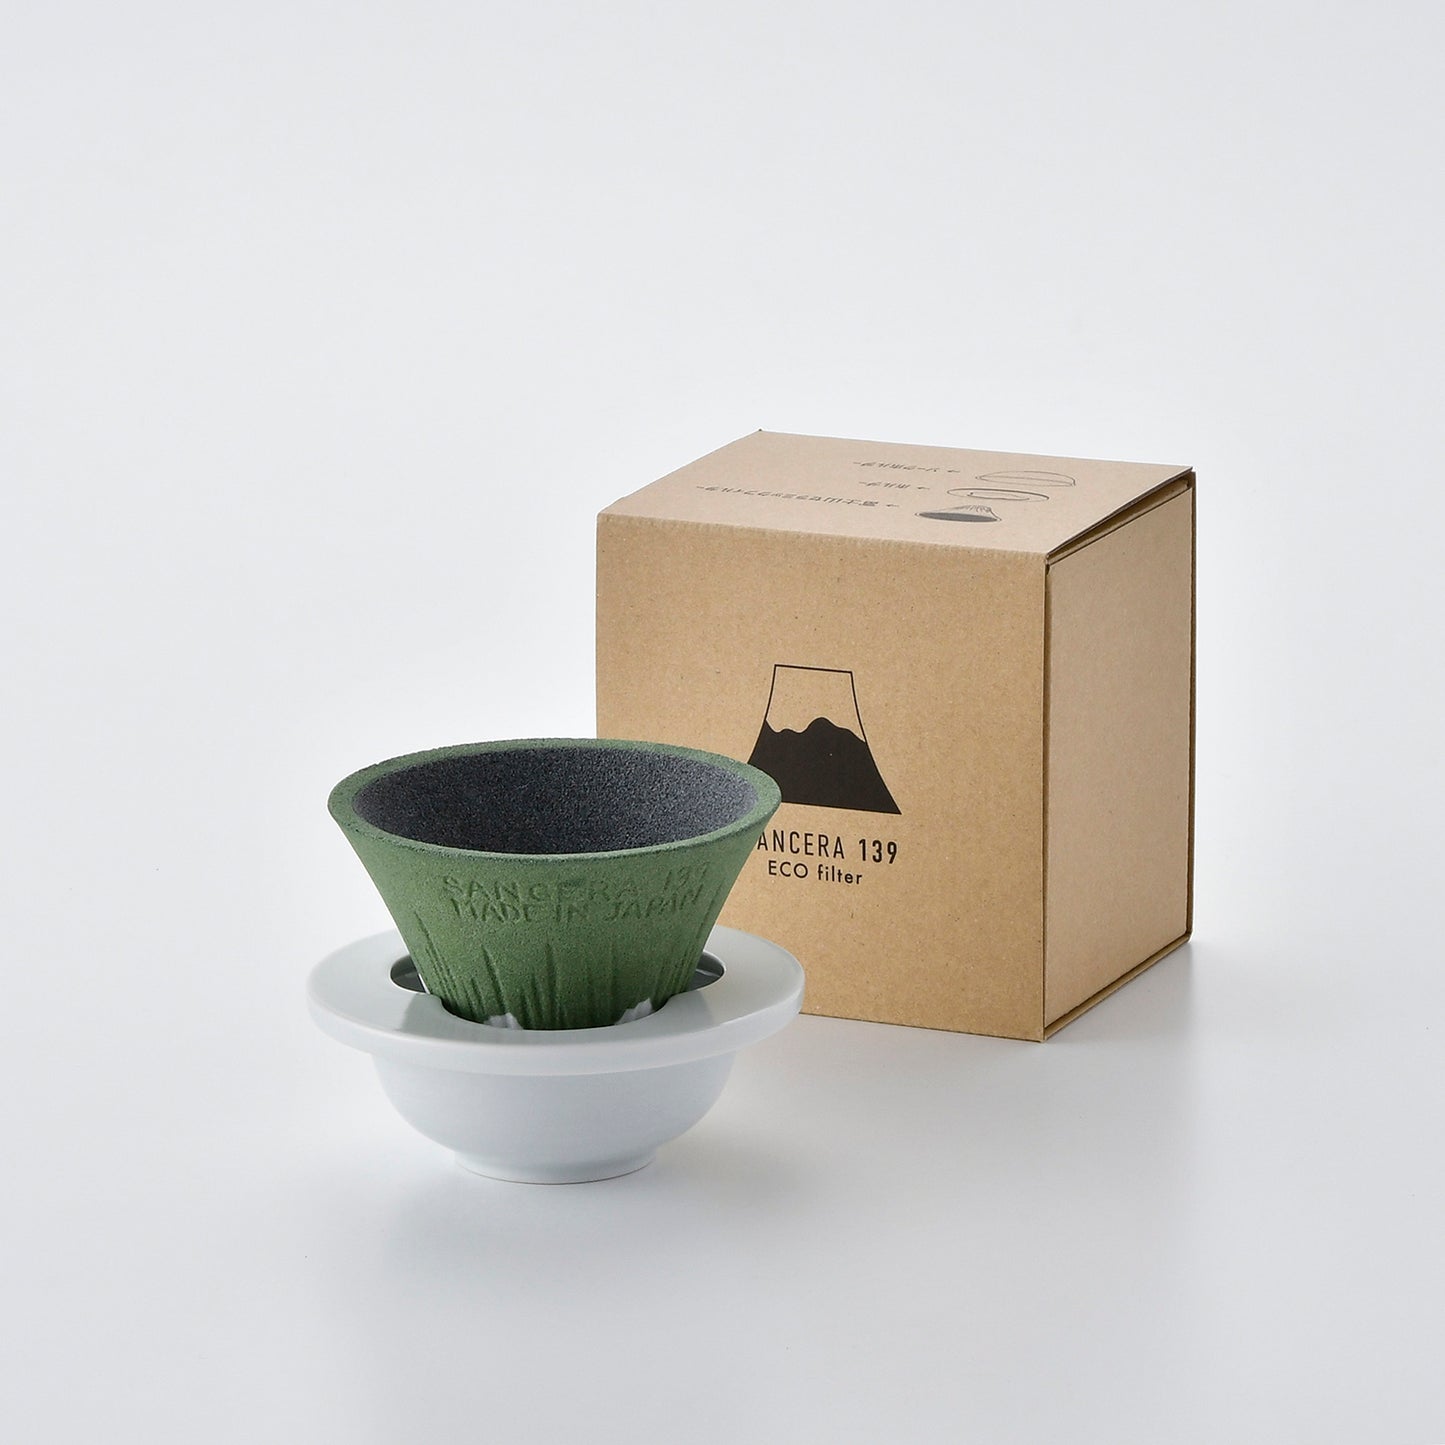 ECO filter 富士山 セラミックコーヒーフィルター 緑